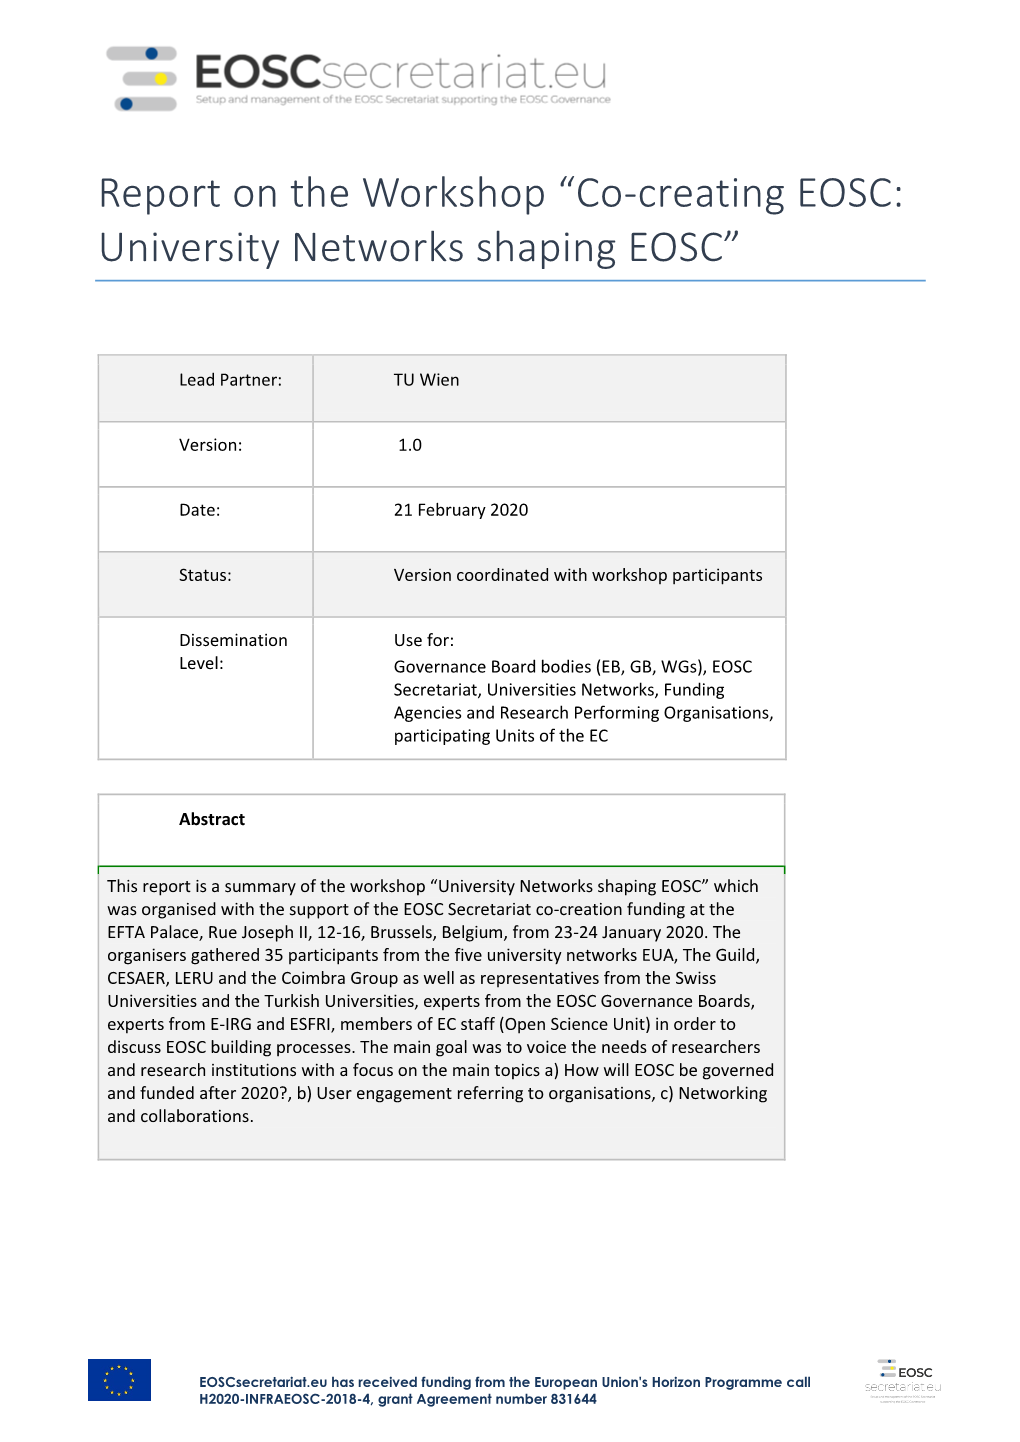 Co-Creating EOSC: University Networks Shaping EOSC”